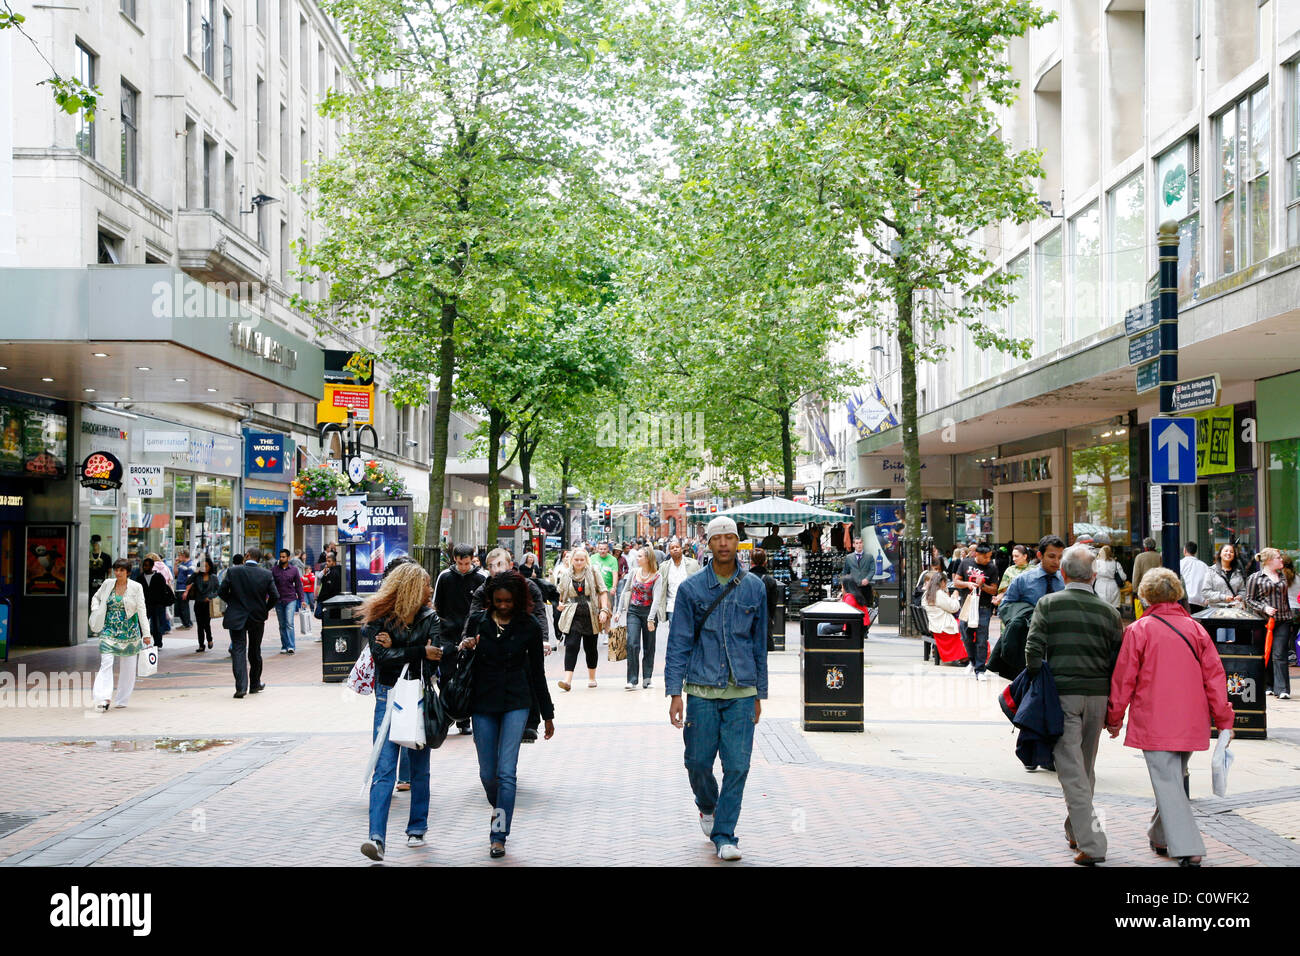 People walking down New Street, a pedestrian street with many shops. Birmingham, England, UK. Stock Photo